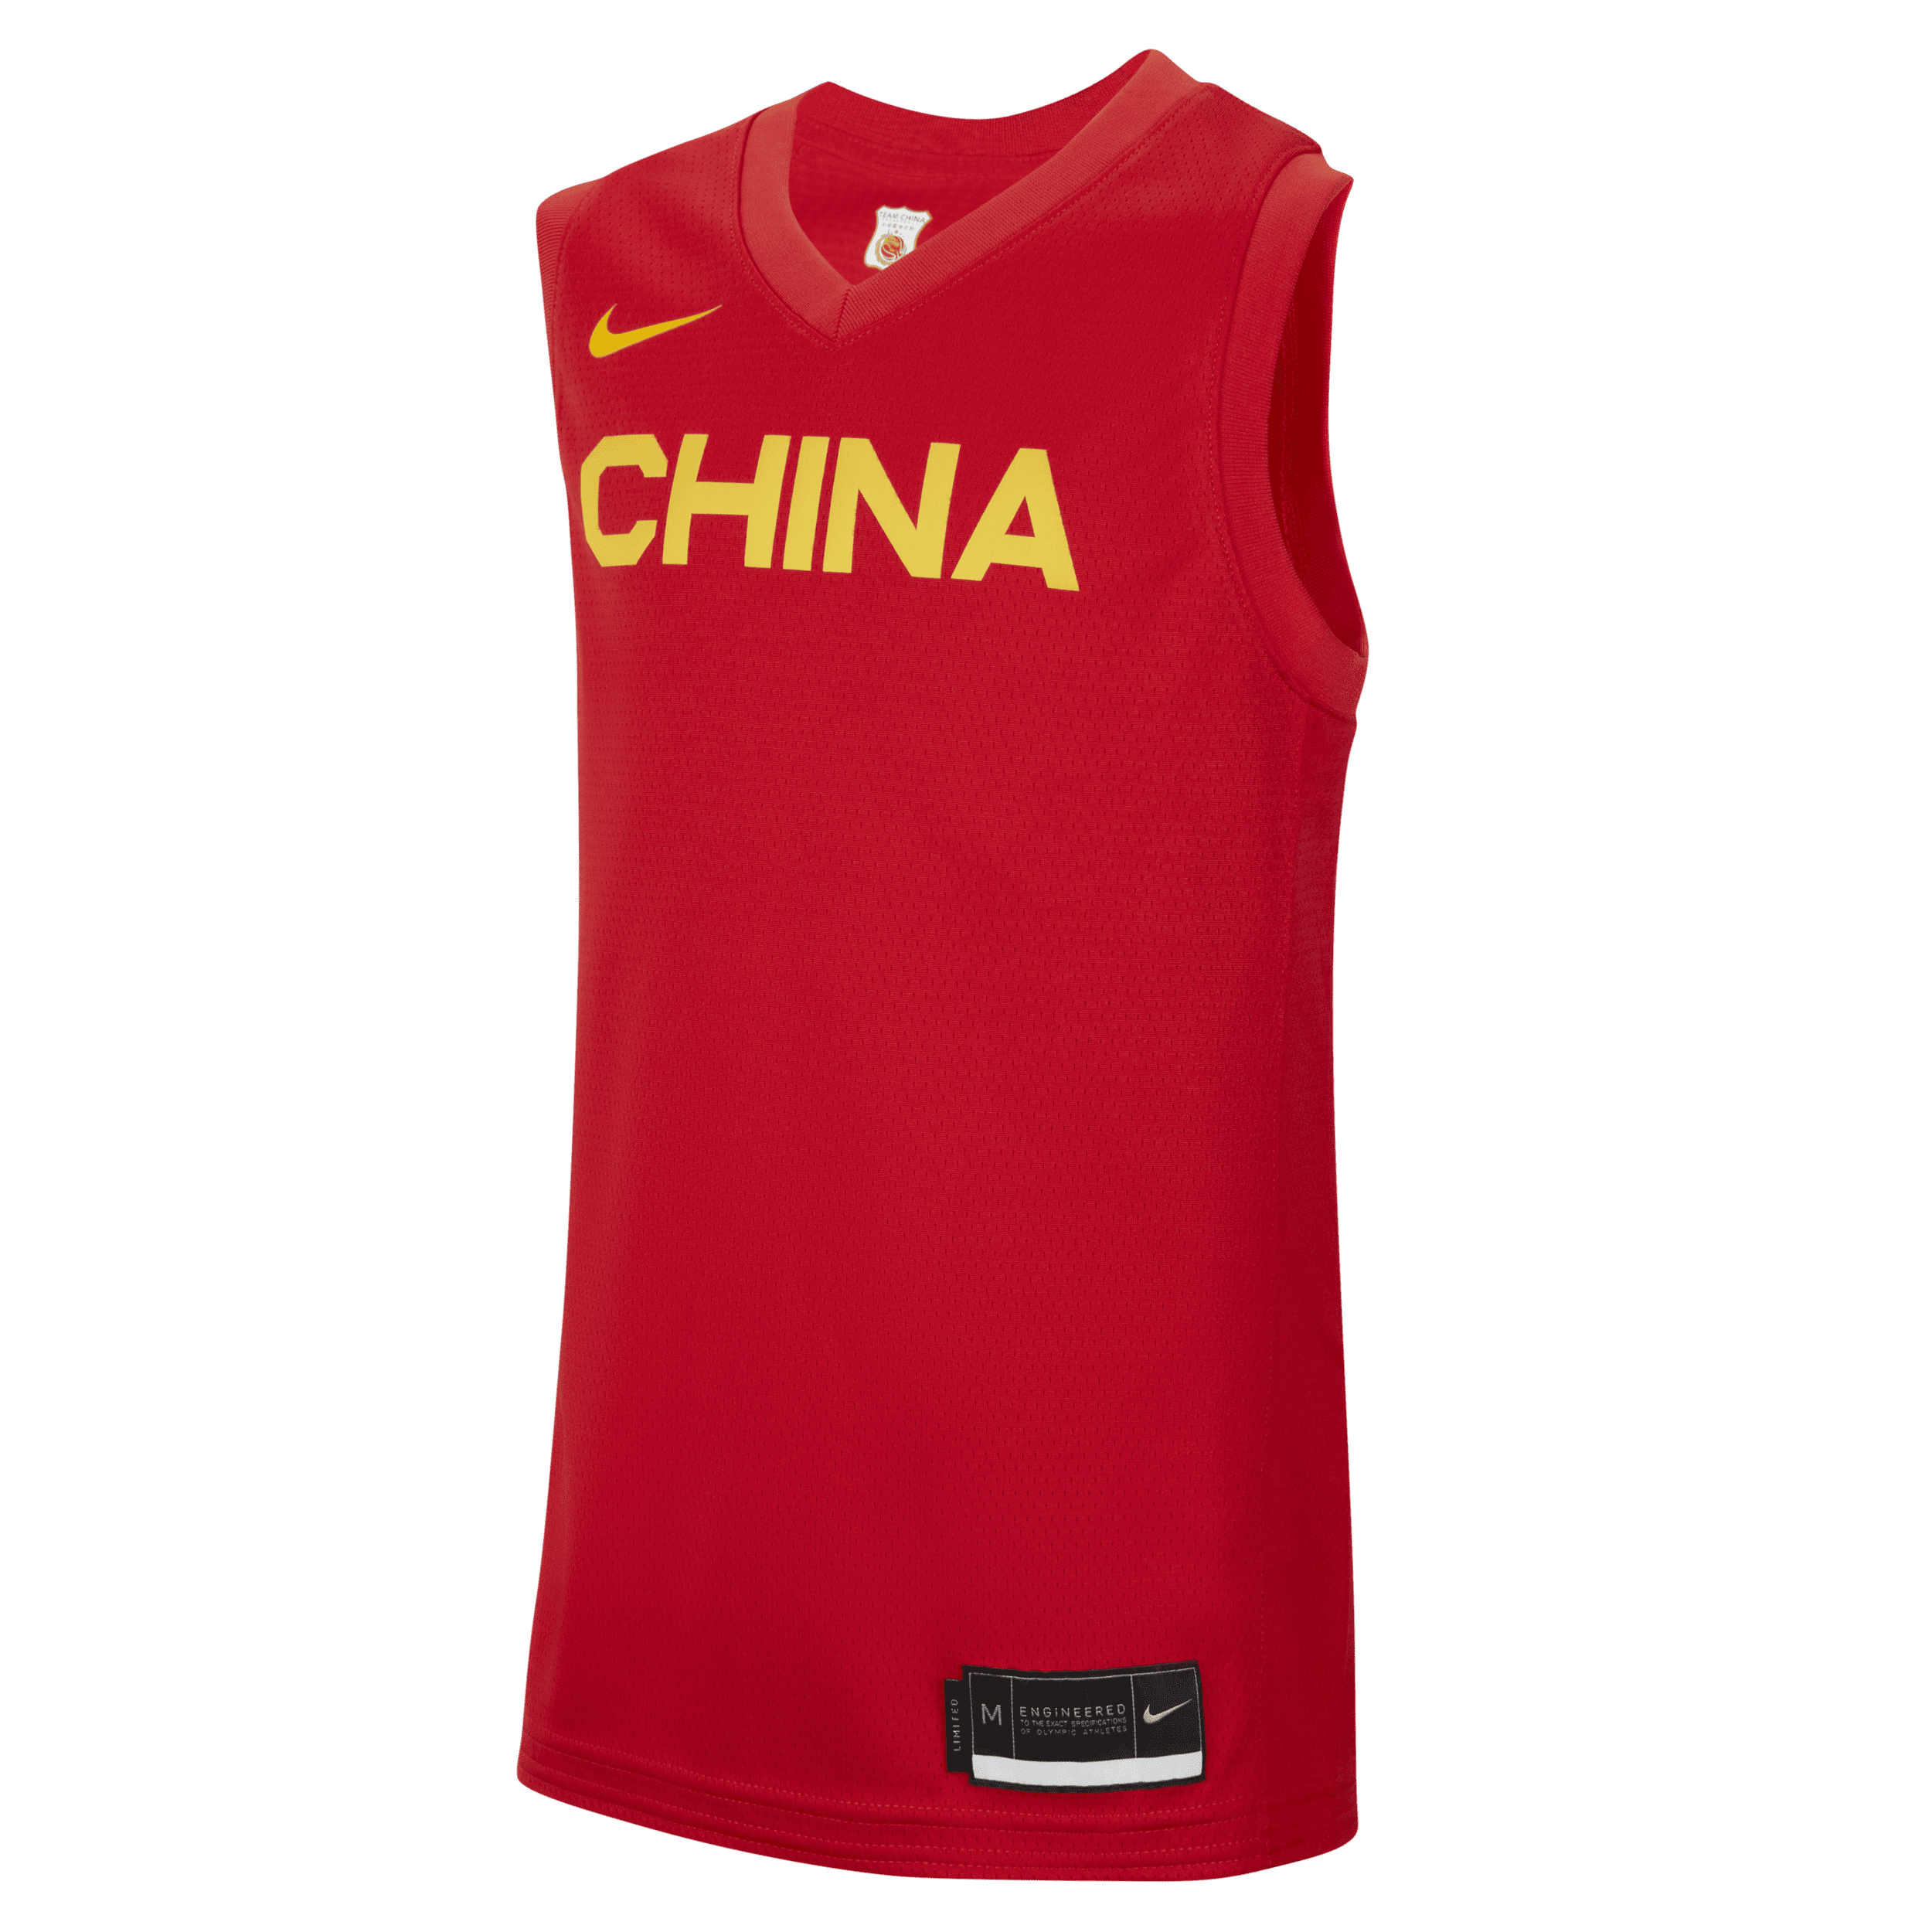 China (Road) Nike basketbaljersey voor kids - Rood